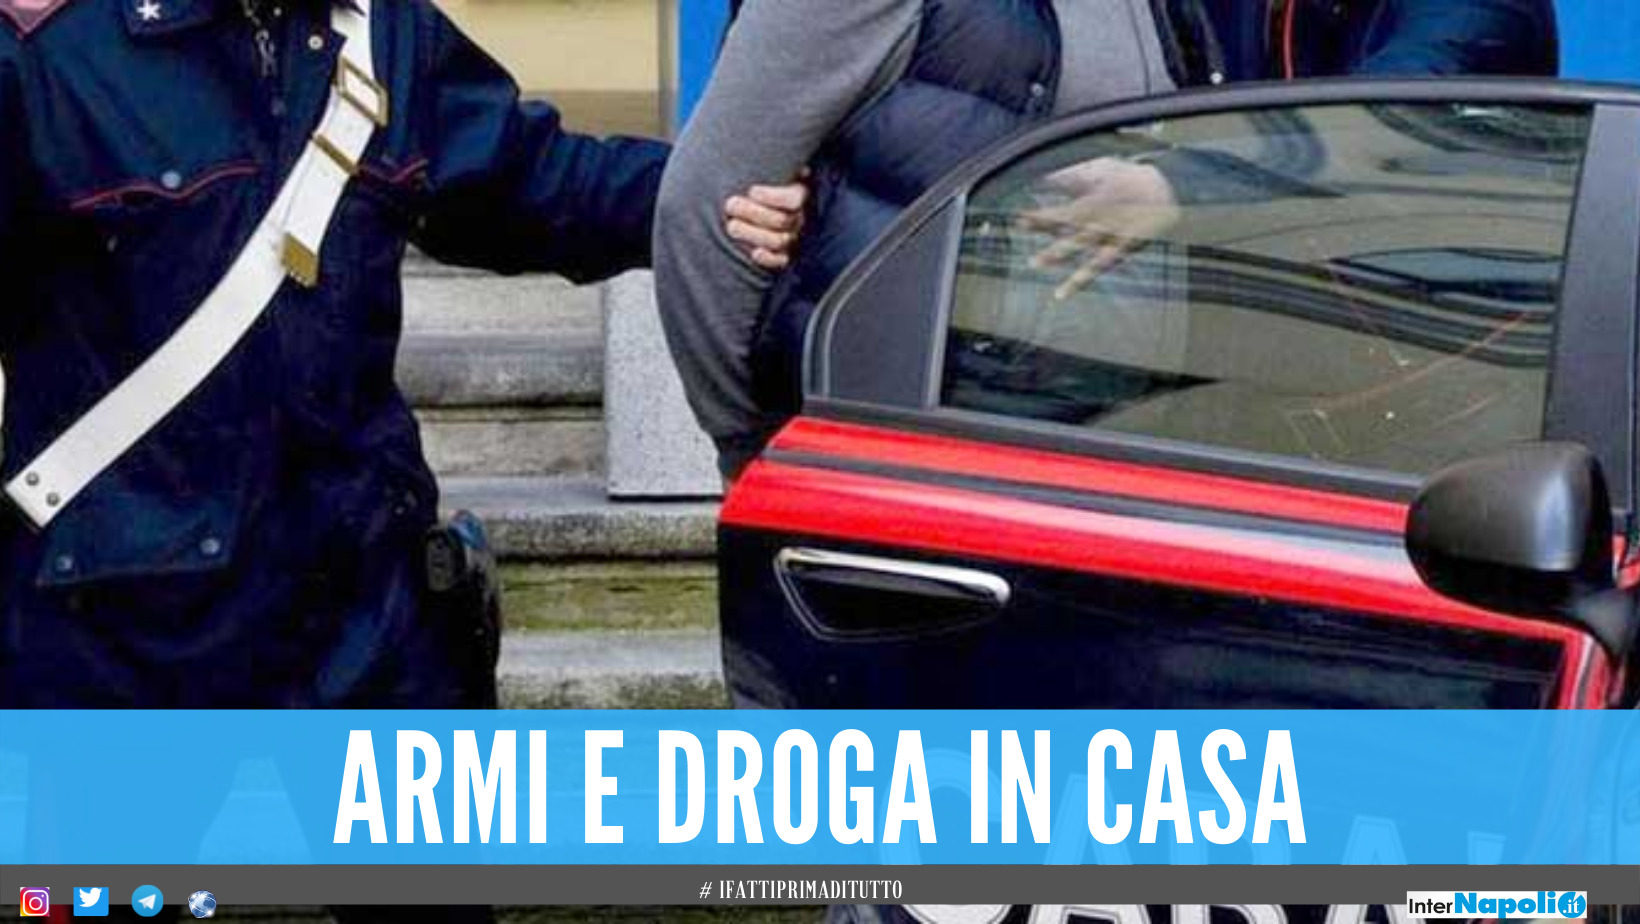 Marijuana, pistola ed una katana in casa: arrestato 53enne in provincia di Napoli